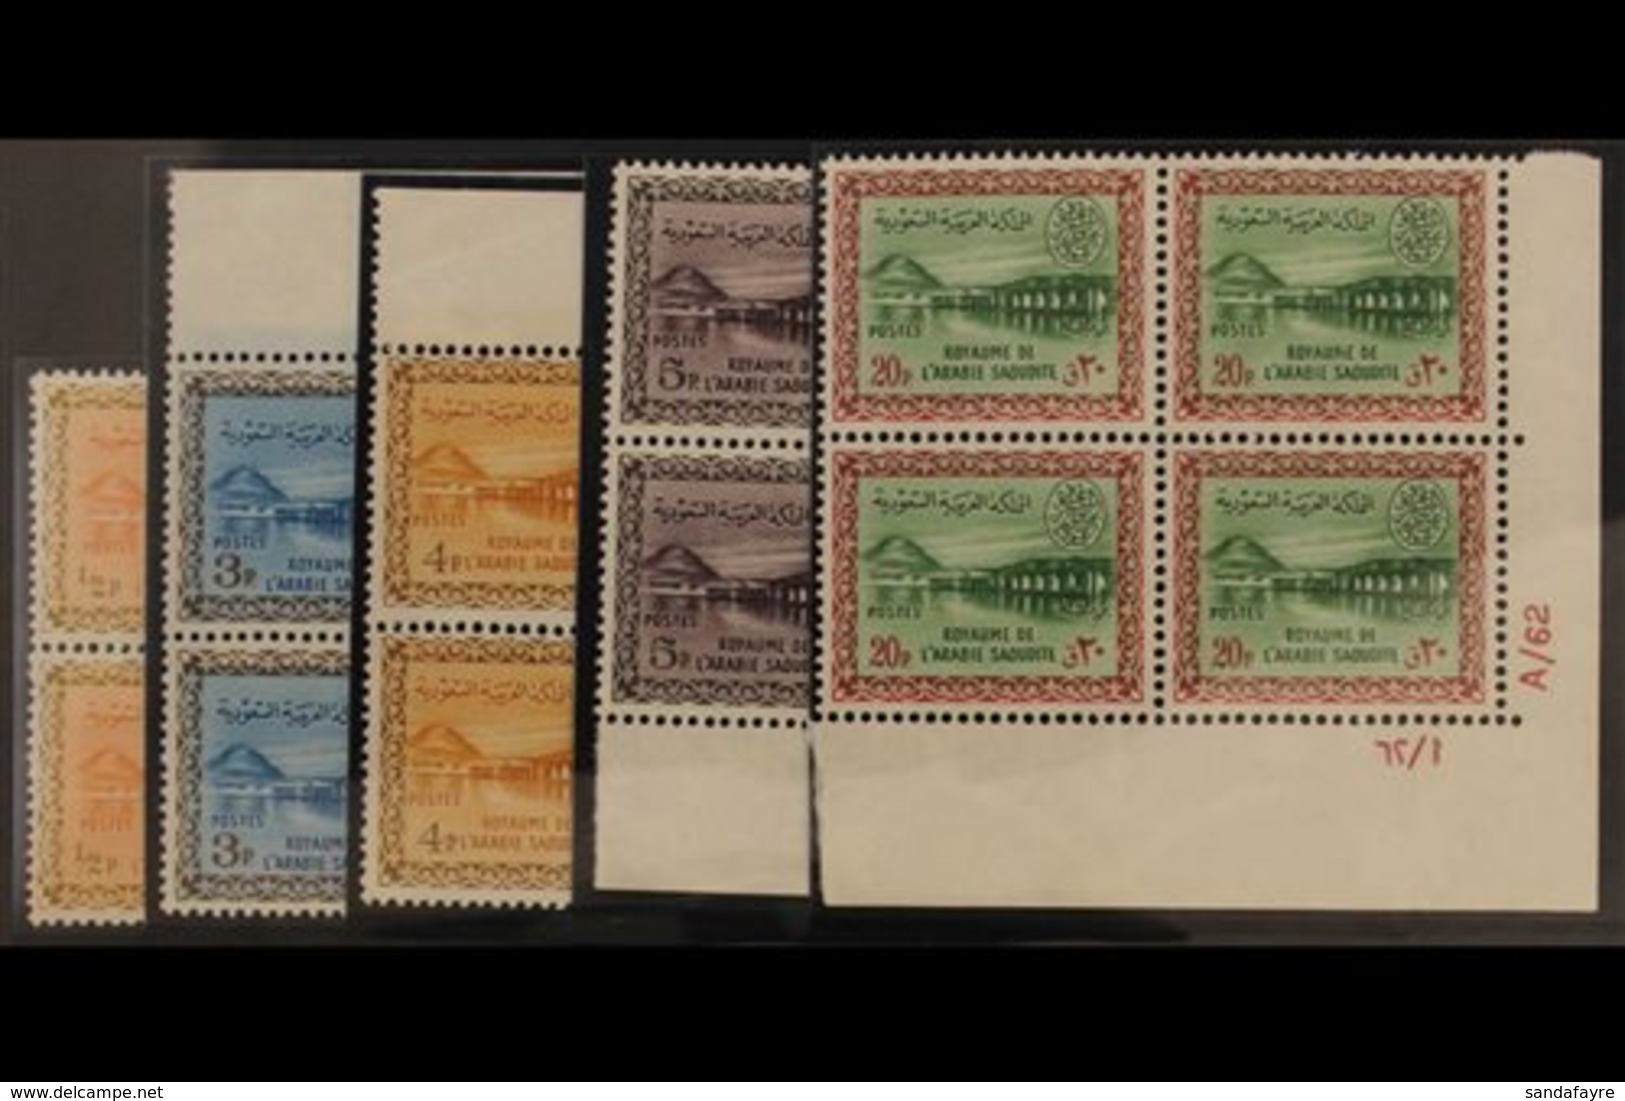 1963 - 5  Wadi Hanifa Dam Set, Wmk Palm And Crossed Swords, SG 476/80, In Superb Never Hinged Blocks Of 4. (20 Stamps) F - Saoedi-Arabië